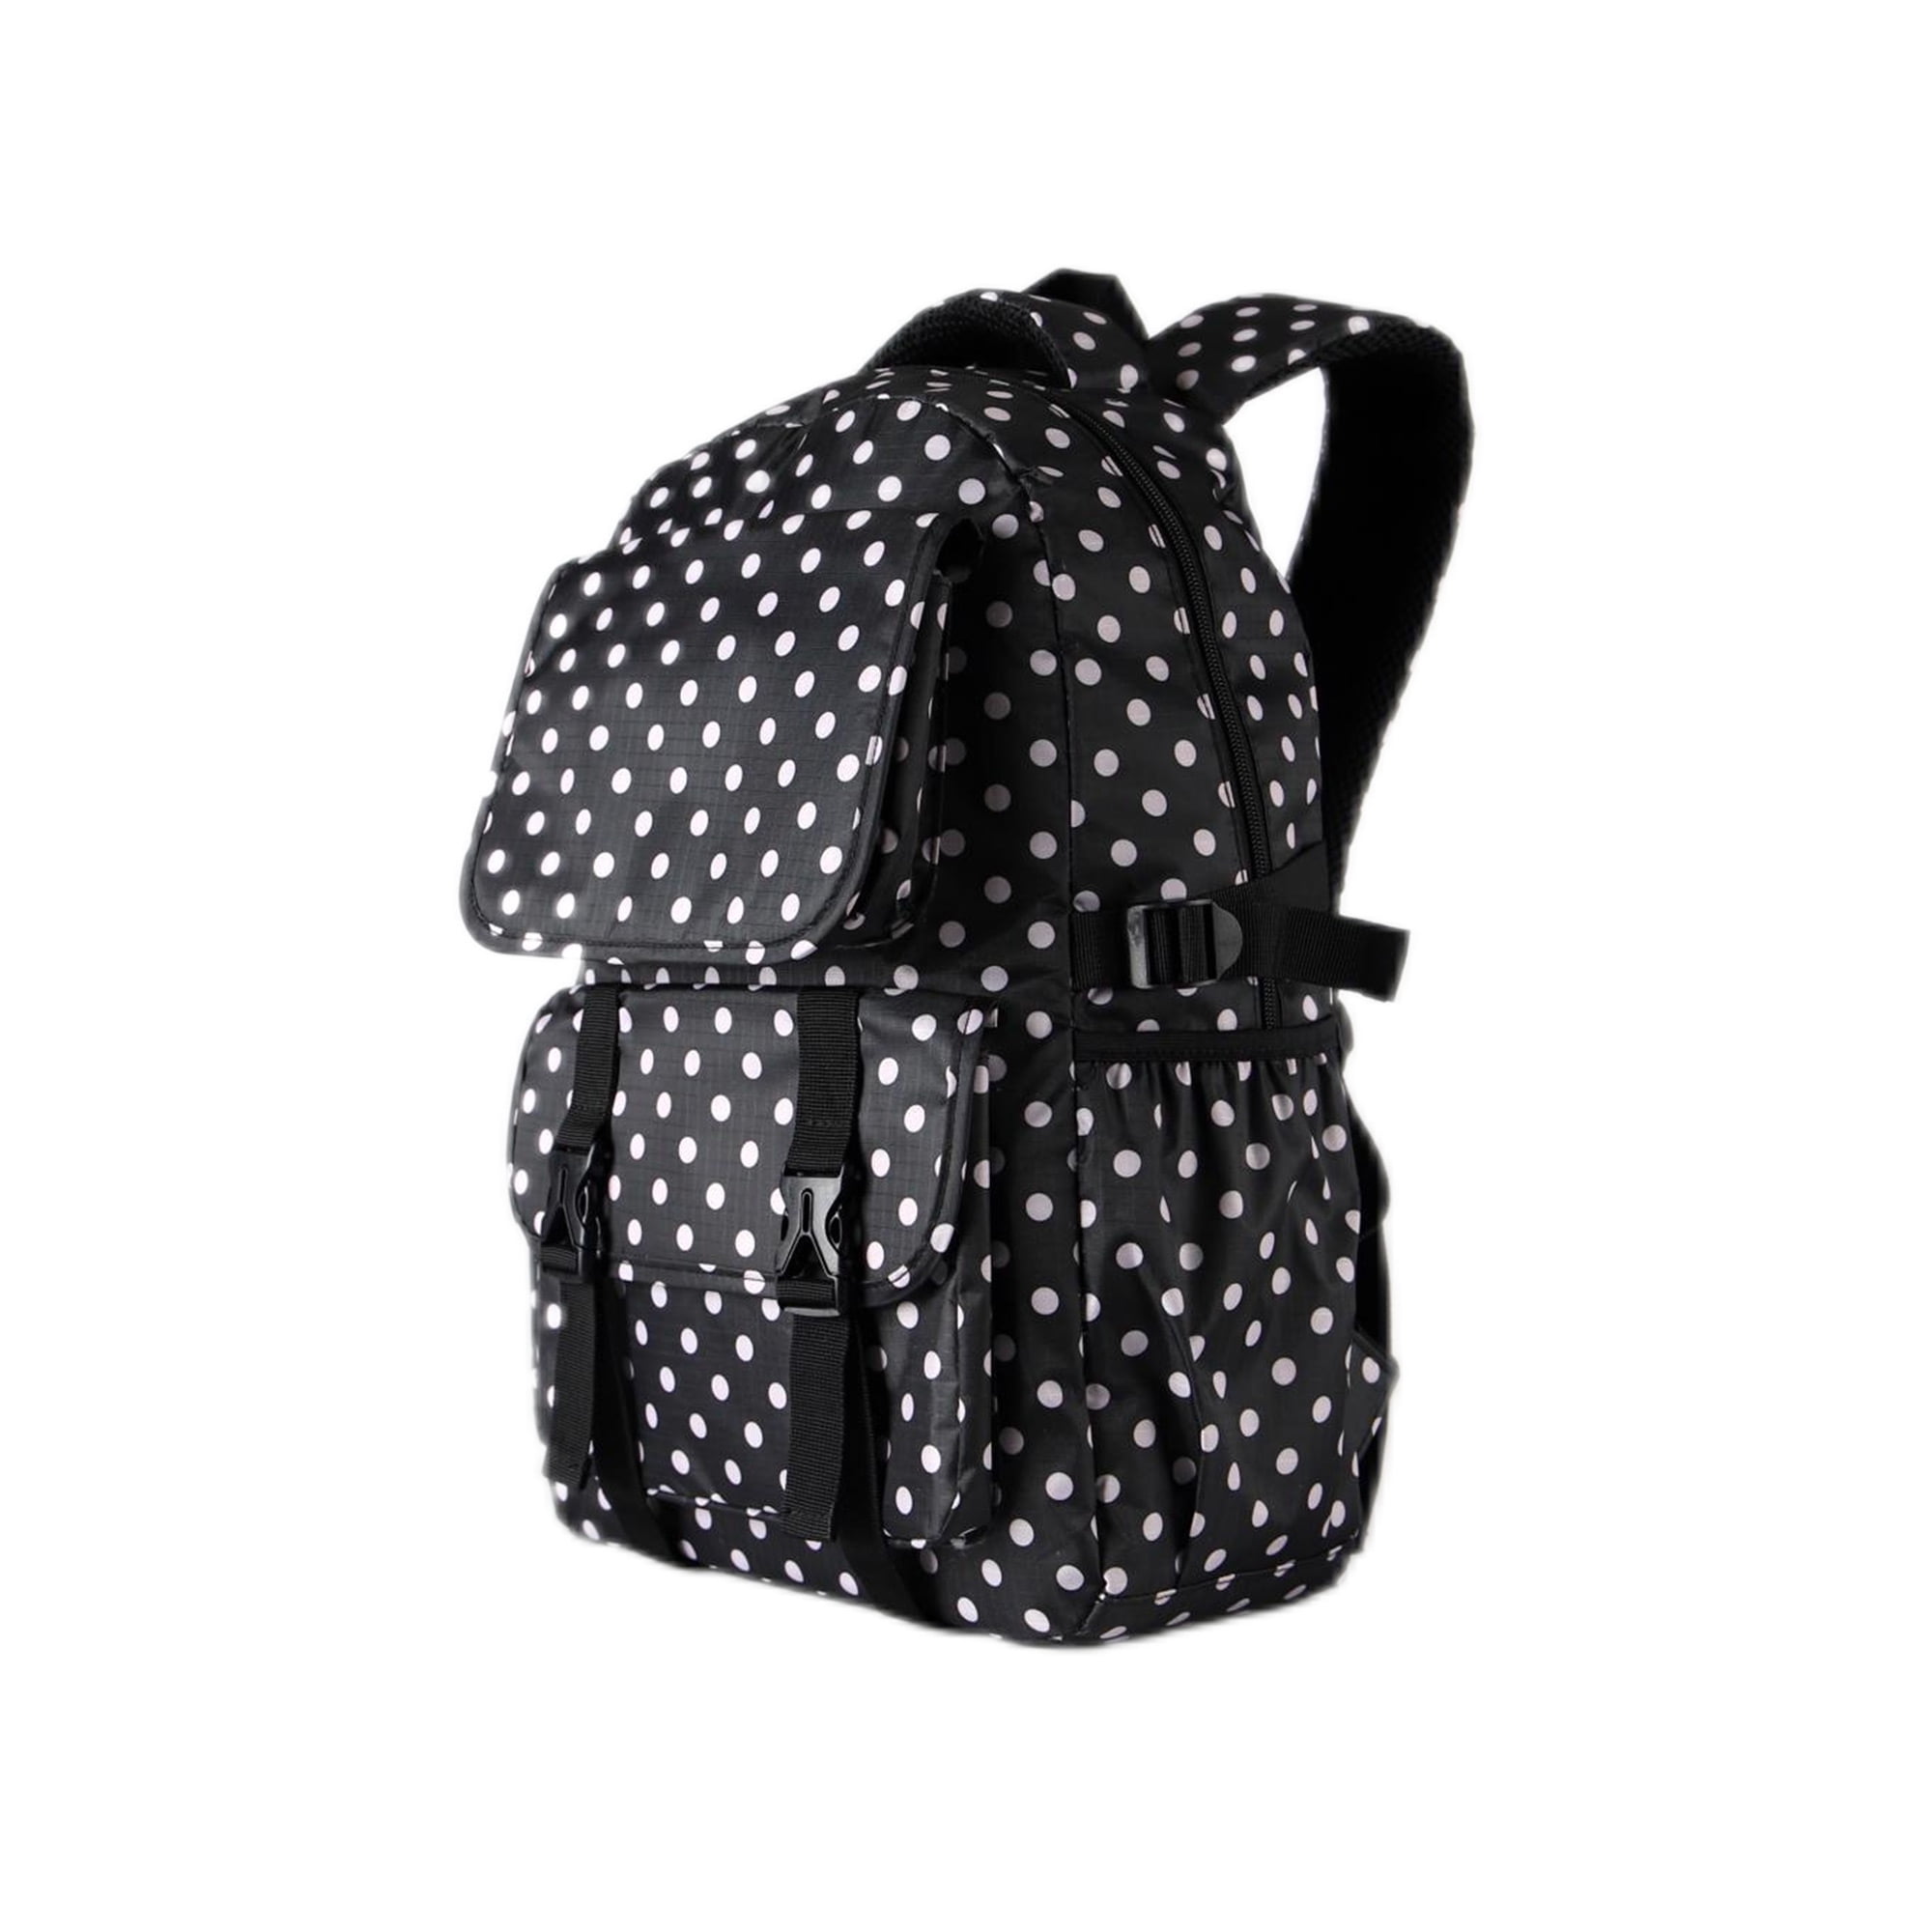 Michael Kors Large Jaycee Abbey Backpack School Bag Black MK Signature